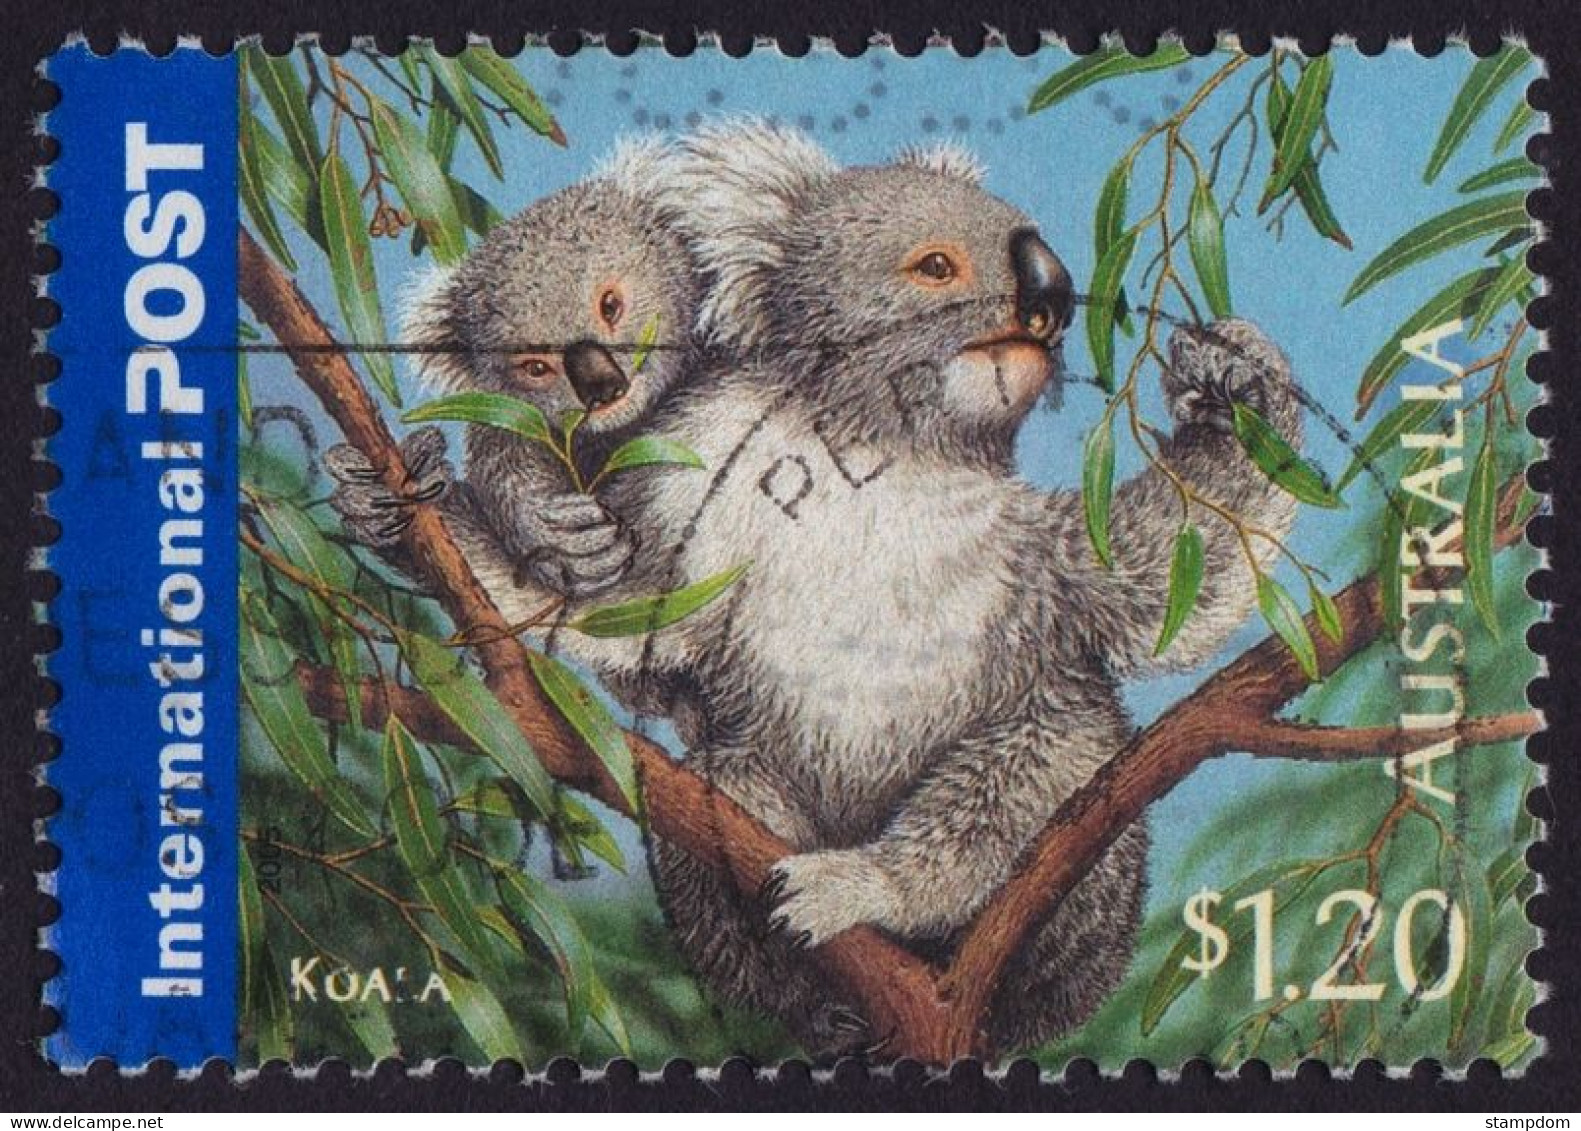 AUSTRALIA  2005 Animals Int'l Post $1.20 Koala Sc#2388 USED @O414 - Gebruikt